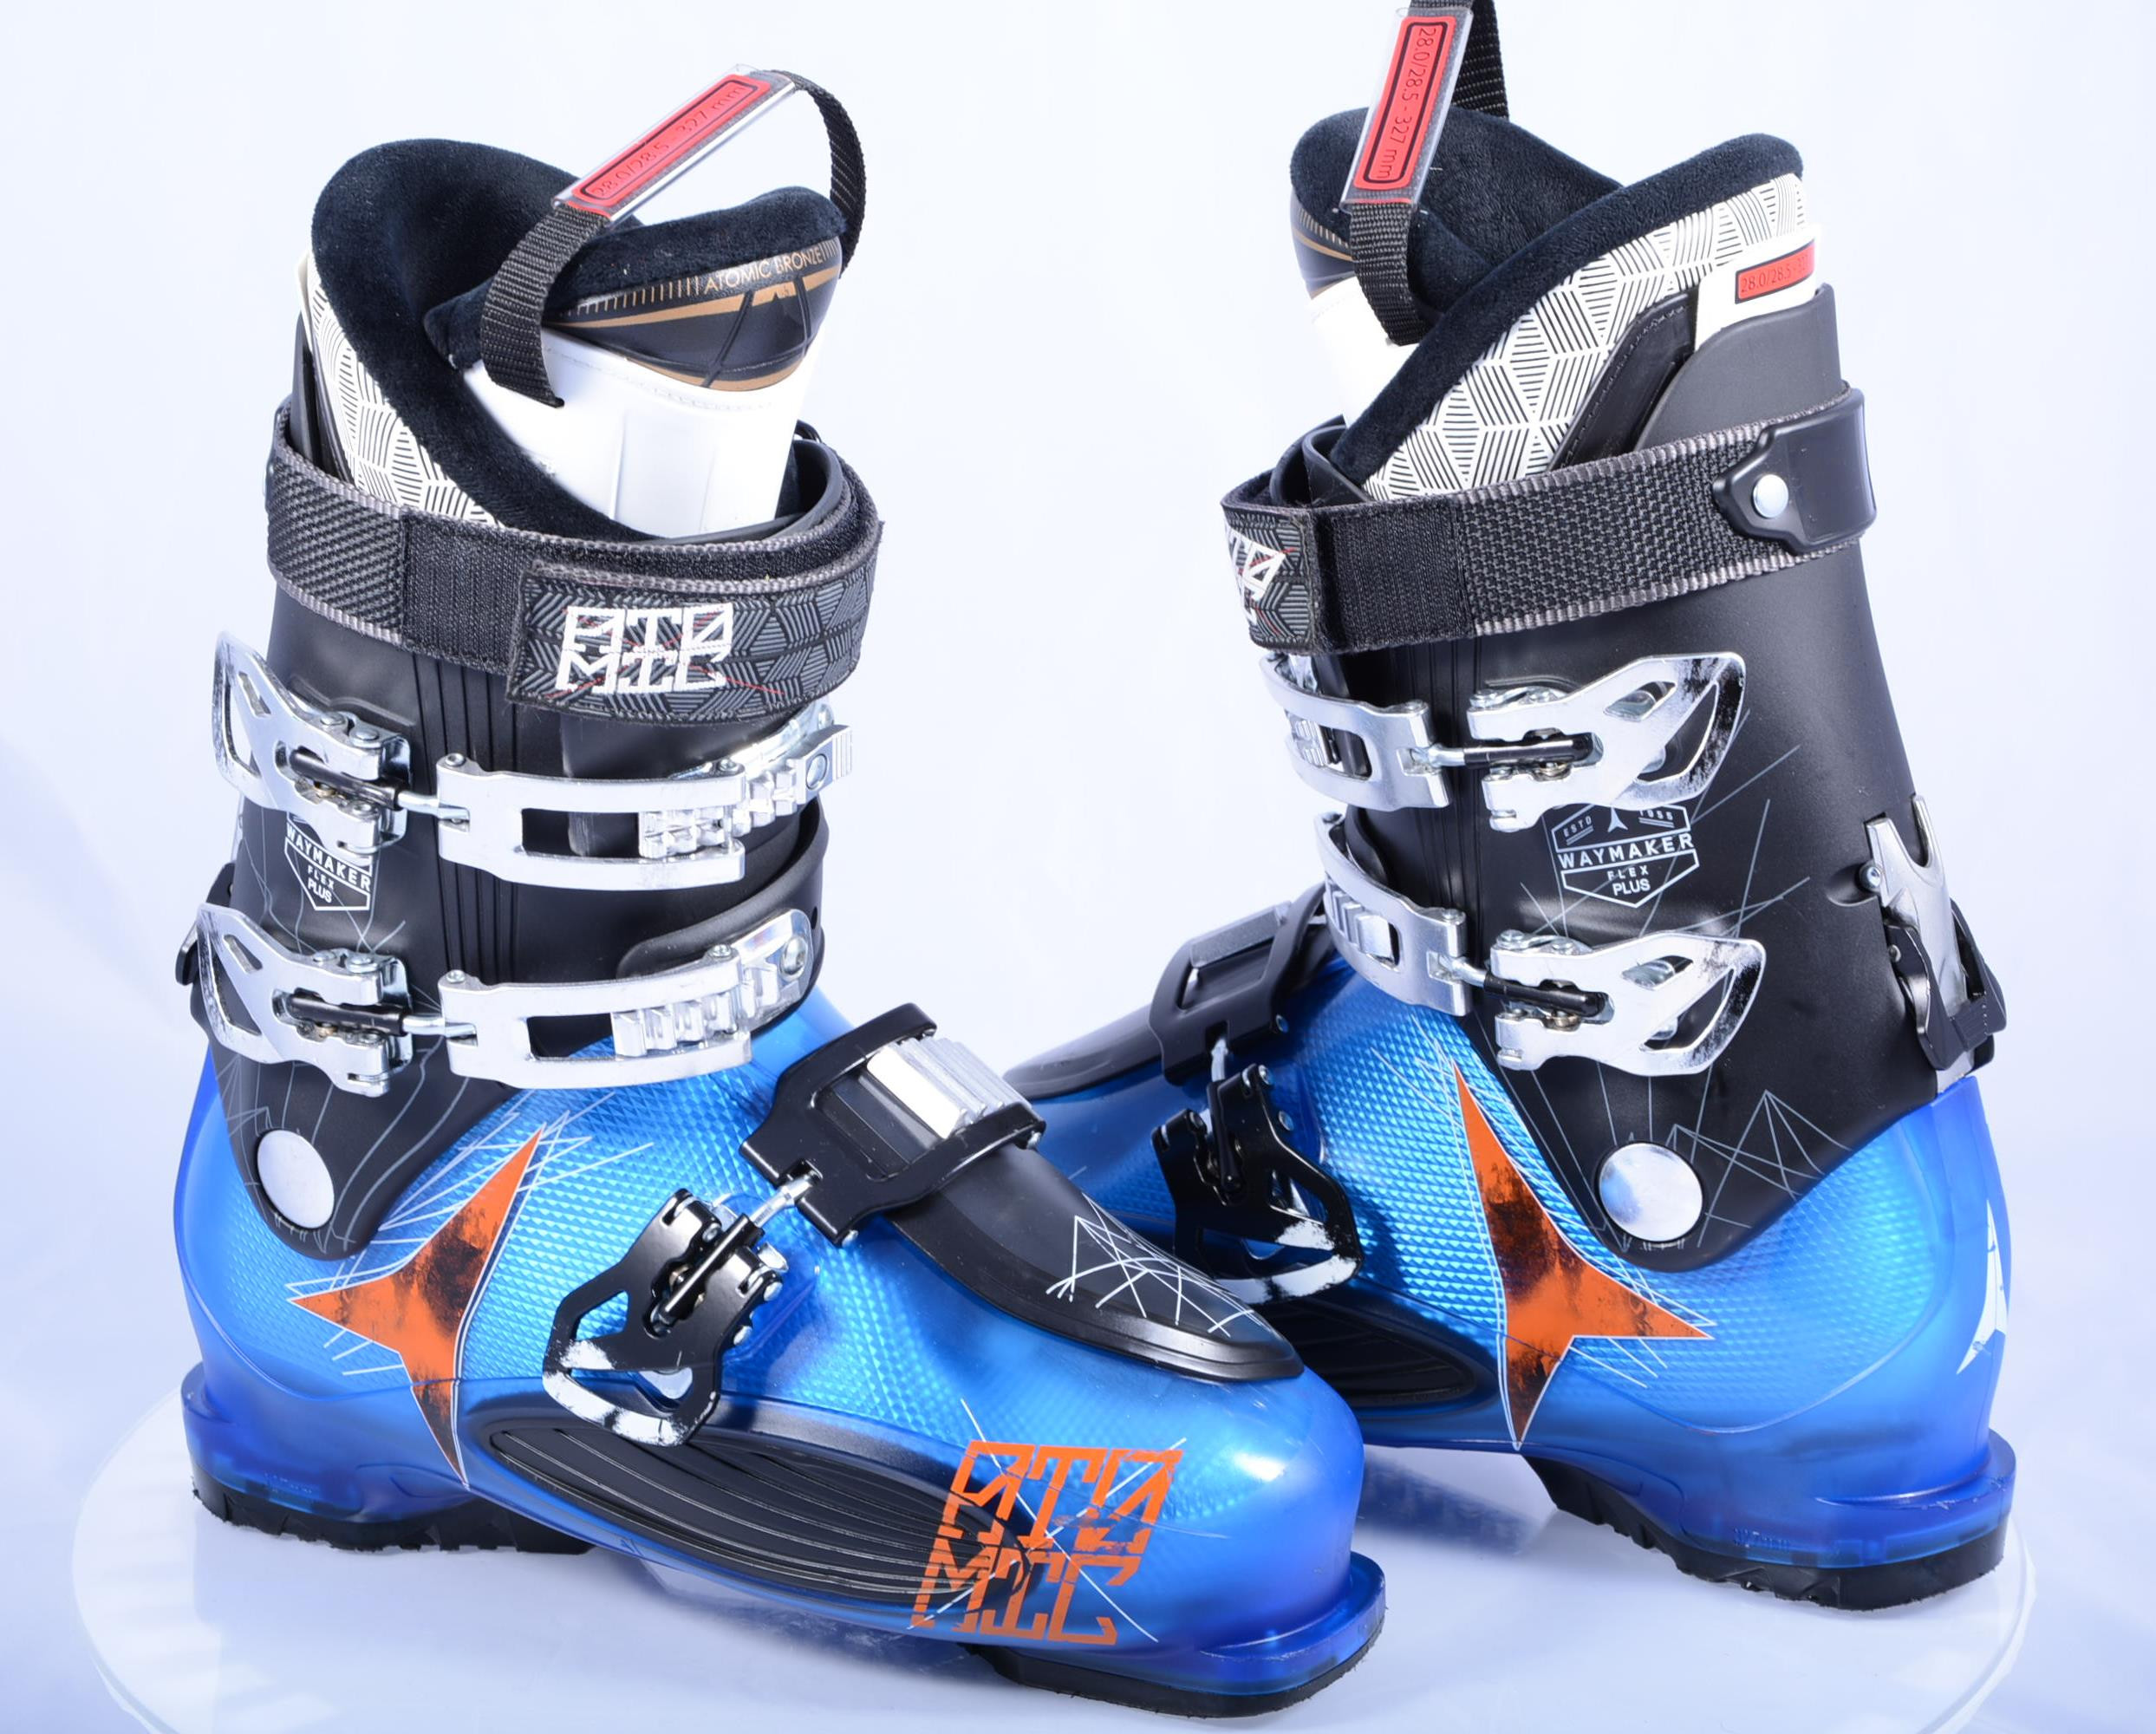 267 mm ski boot size